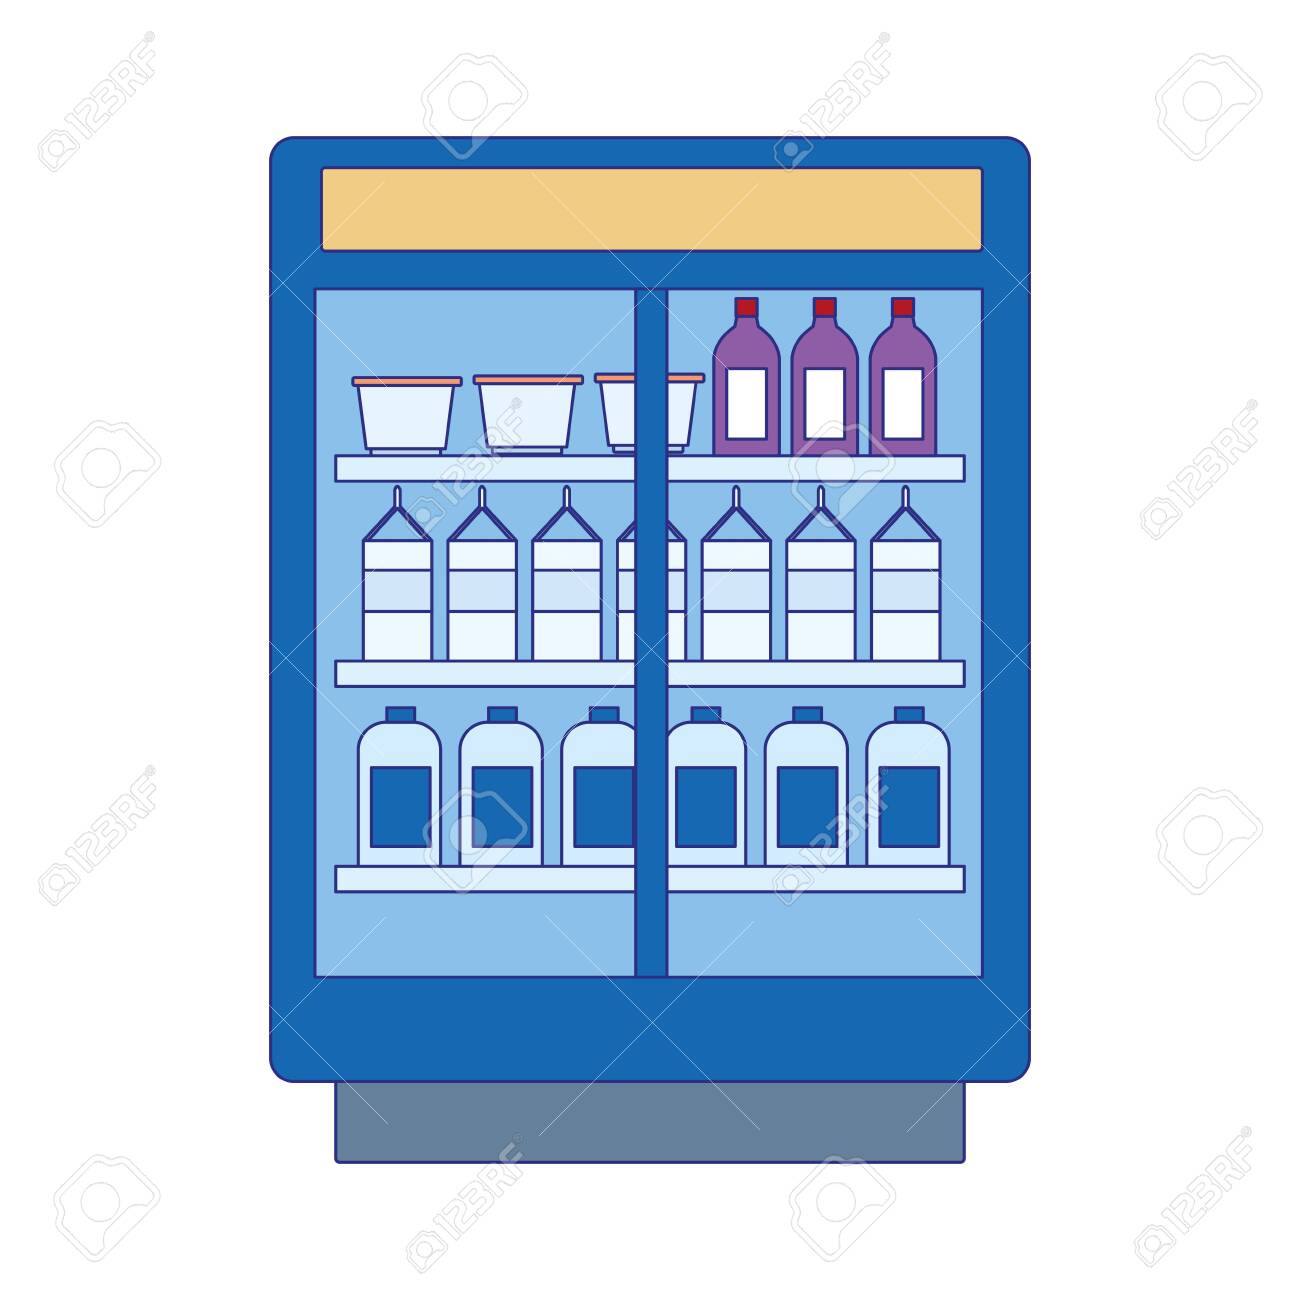 Beverages Bottles Fridge Icon Over White Background Vector